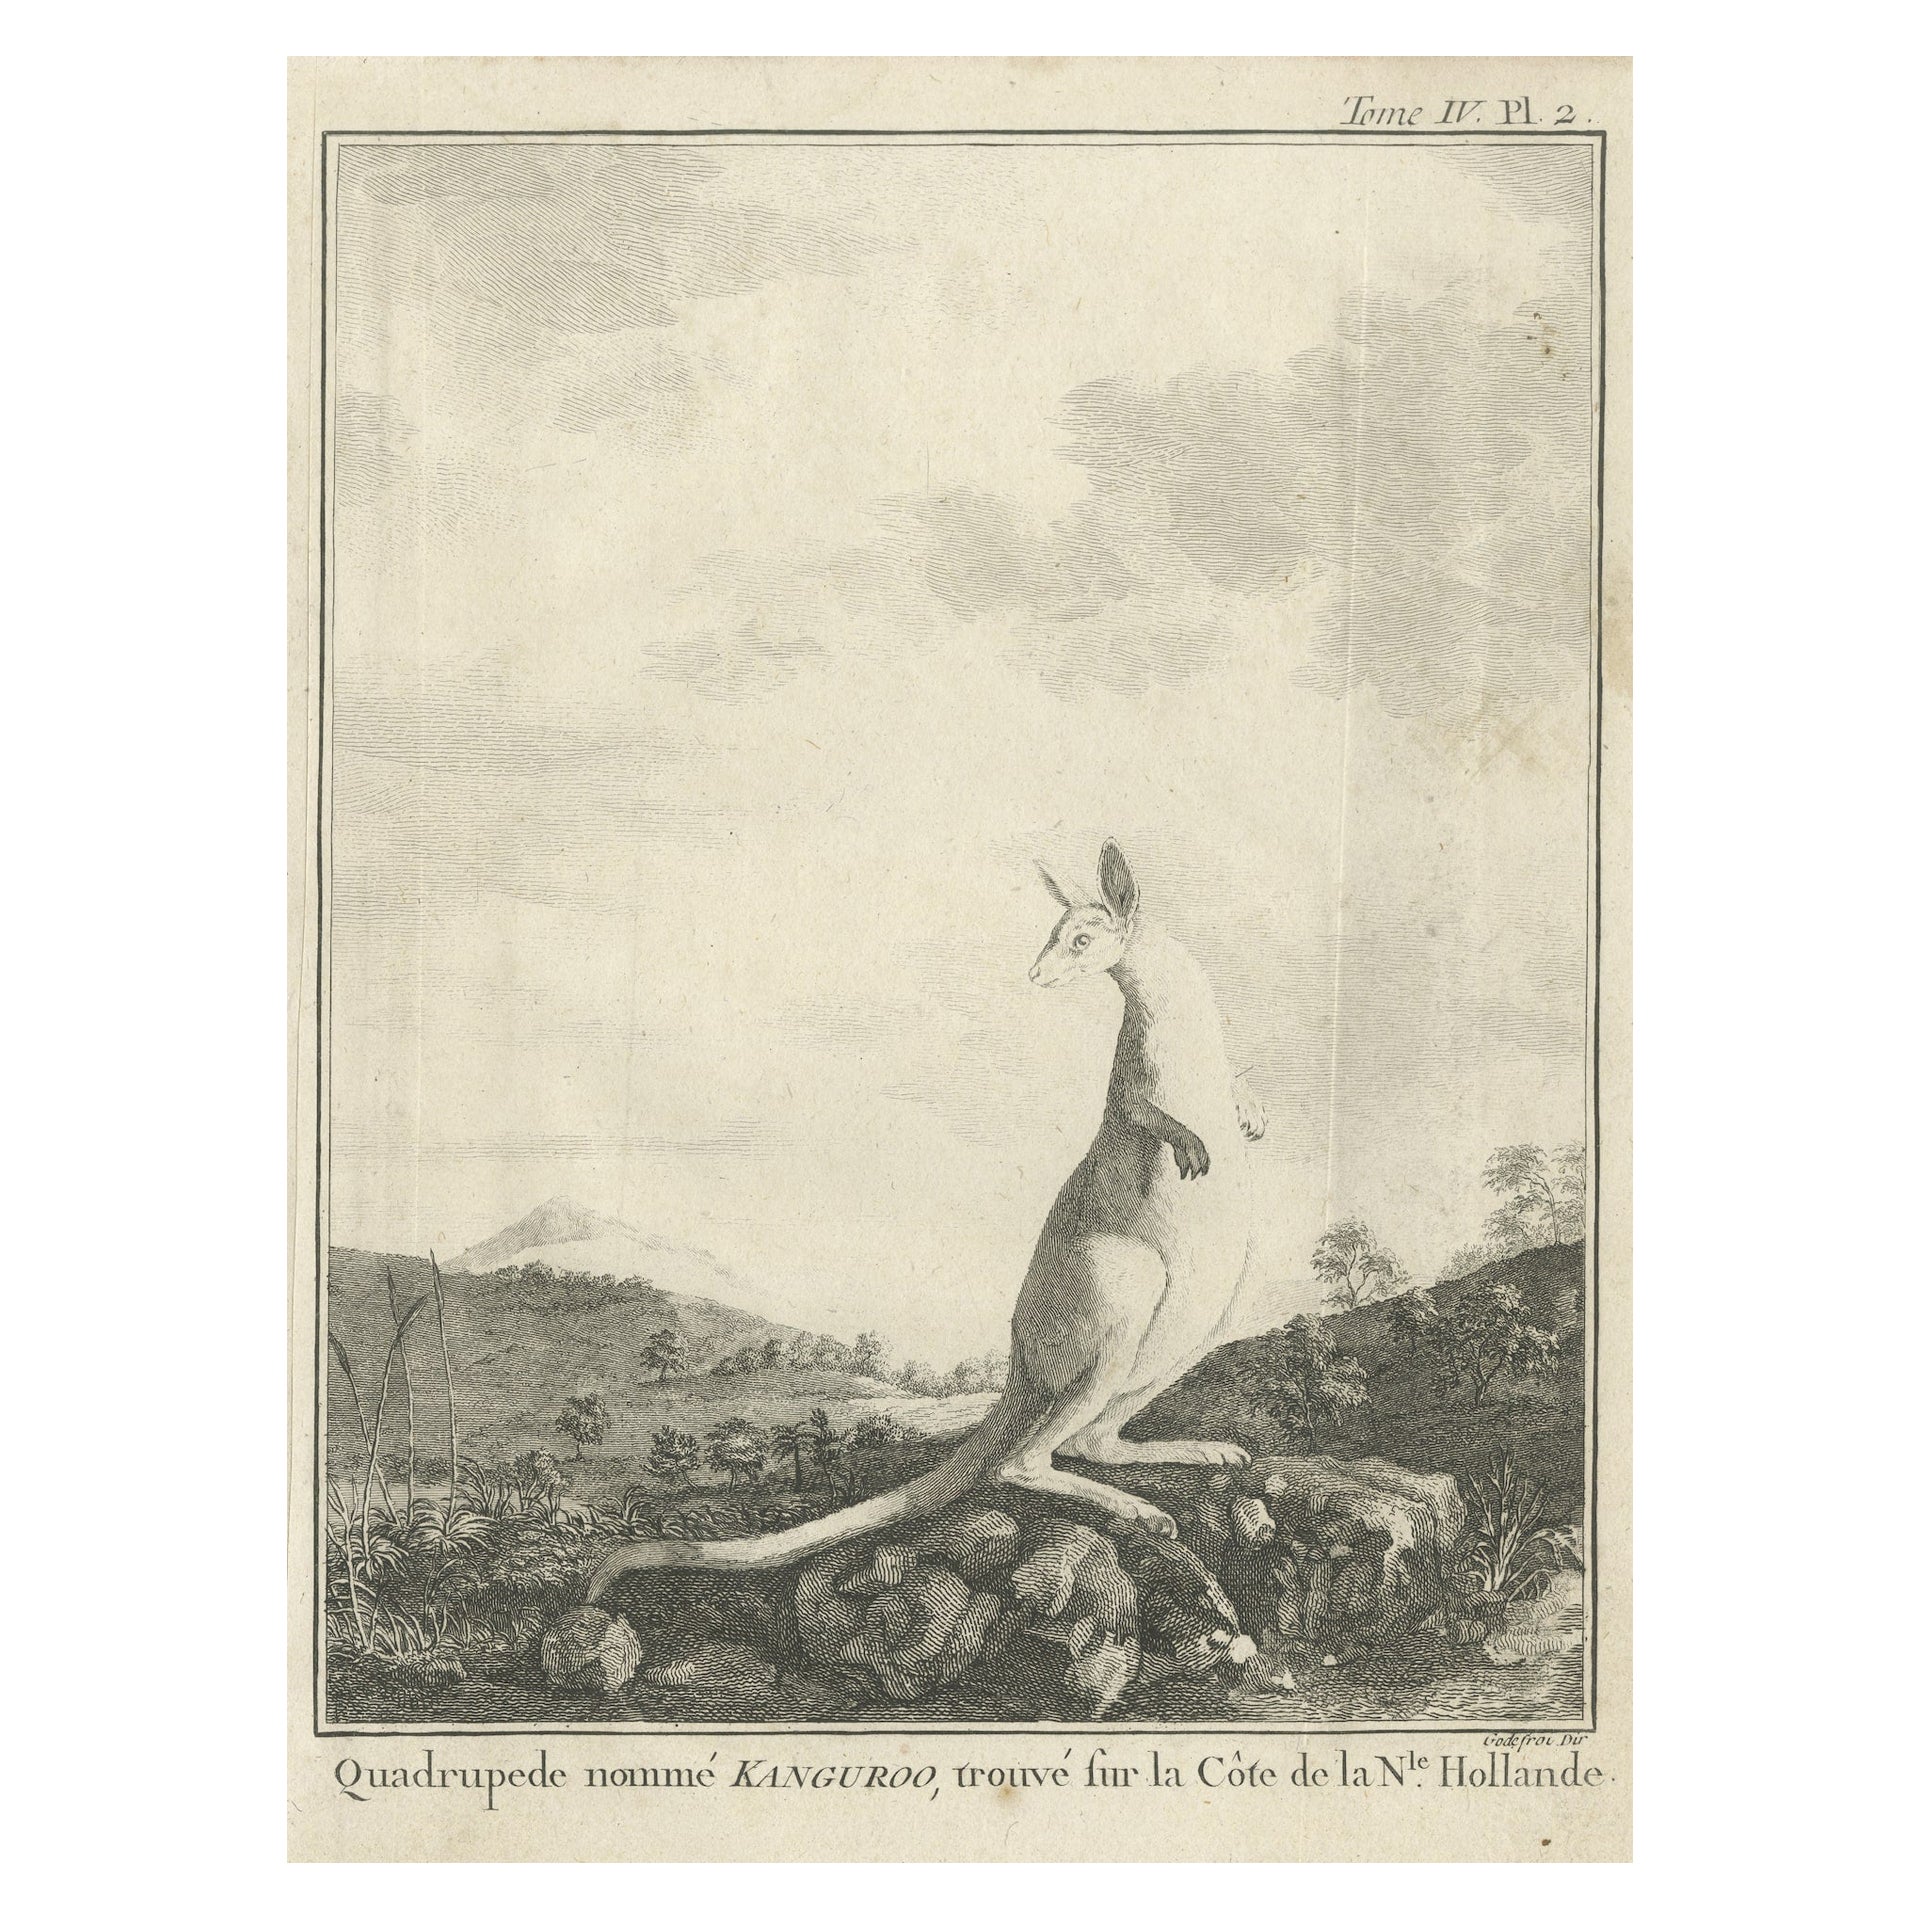 Antique Copper Engraving of a Kangaroo in Australia, 1744